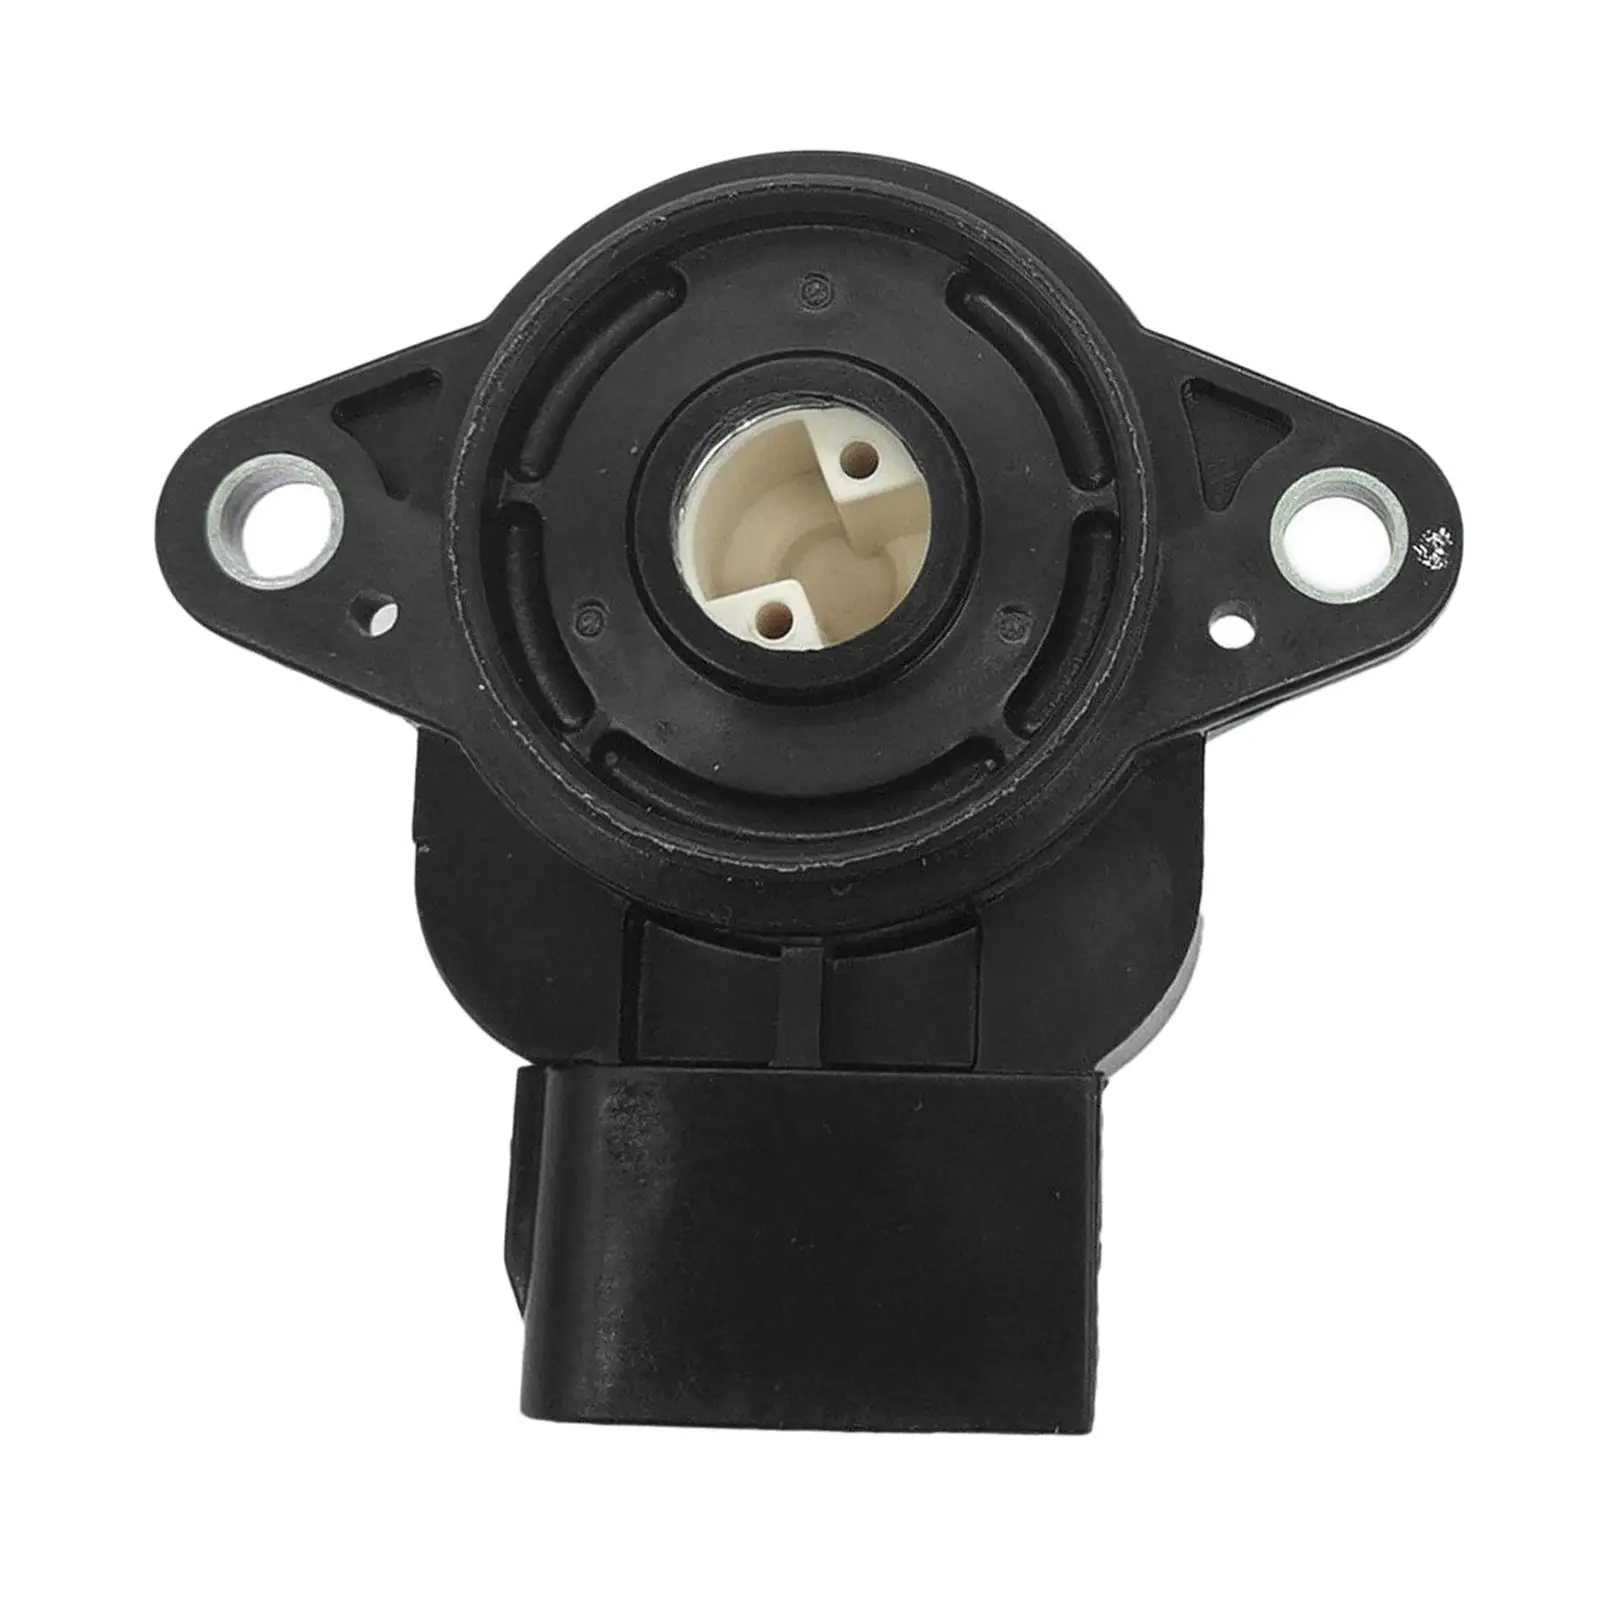 89452-20130 Throttle Position Sensor for Matrix Replacements Parts Replacement Kit